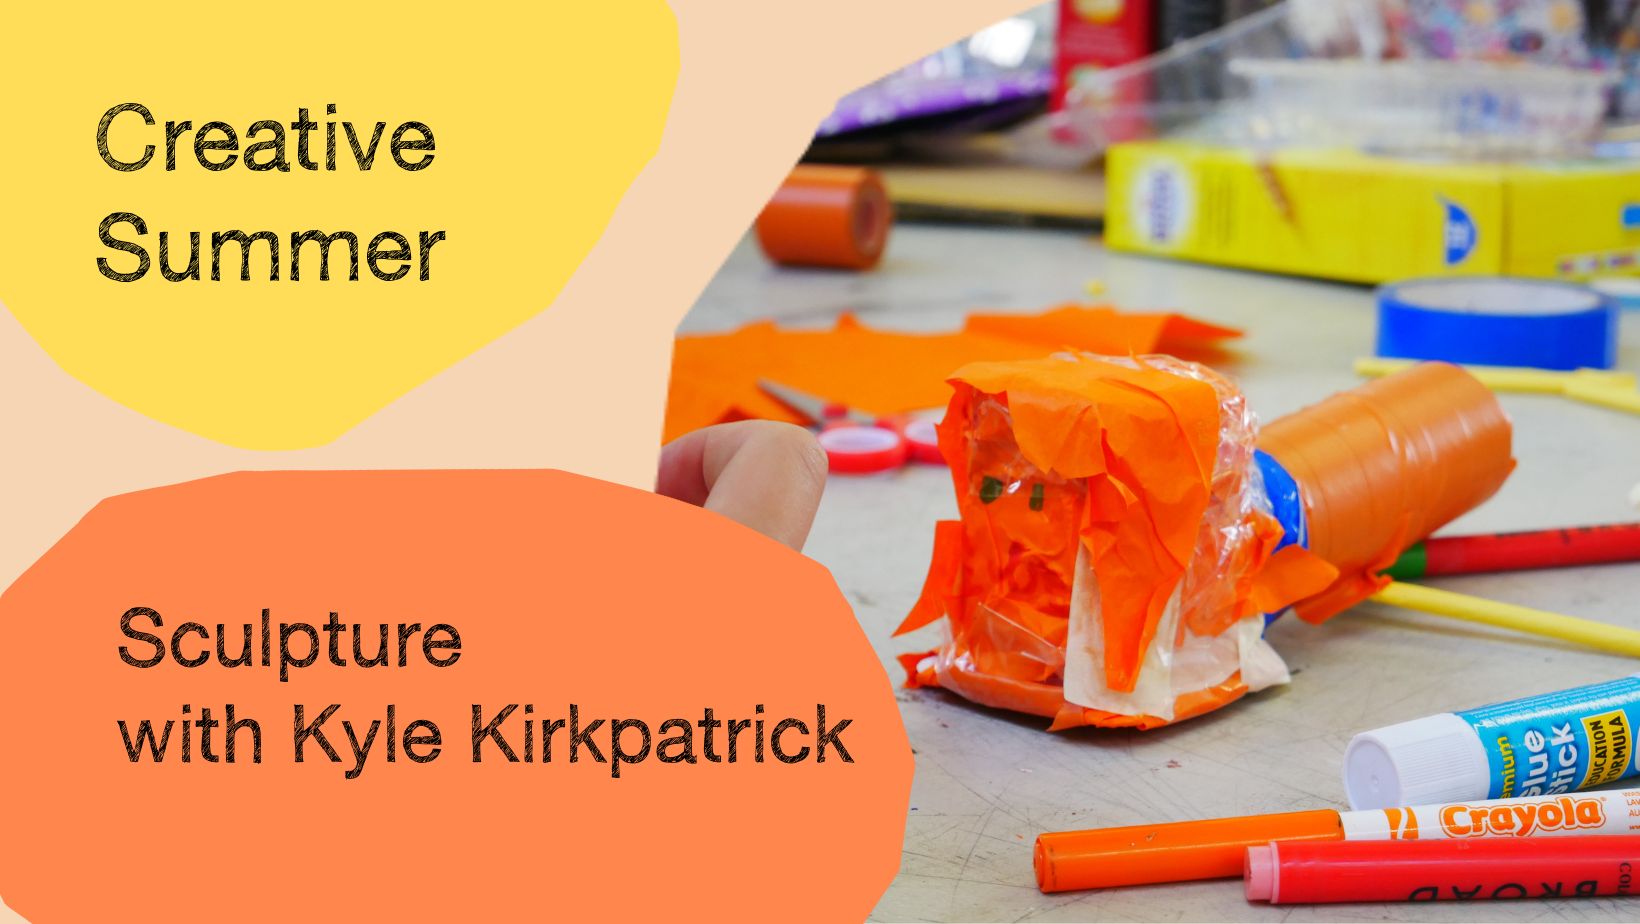 Creative Summer: Sculpture with Kyle Kirkpatrick Top Image